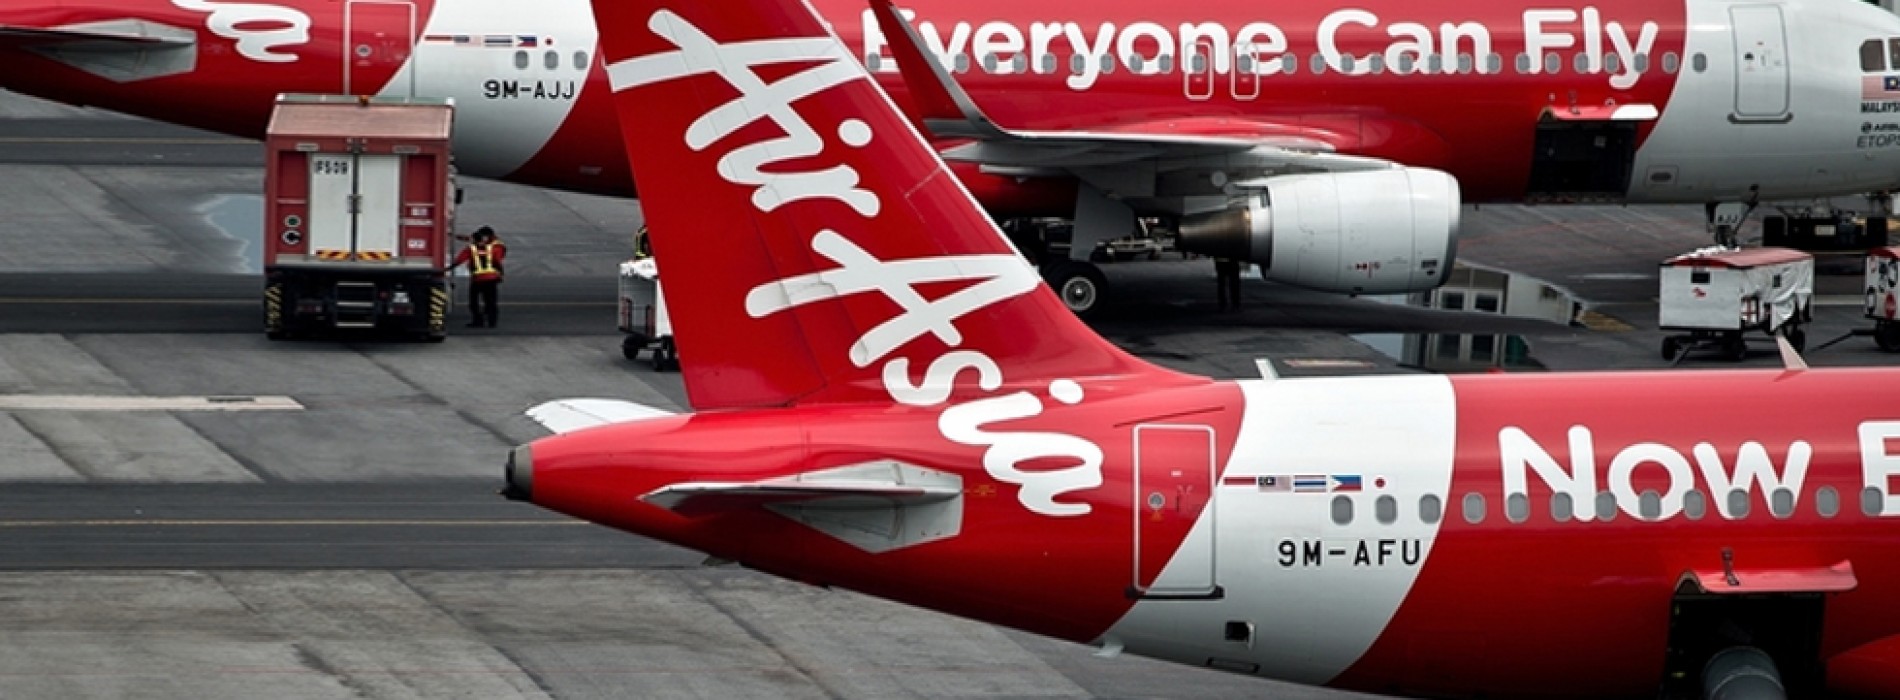 AirAsia India introduces new routes